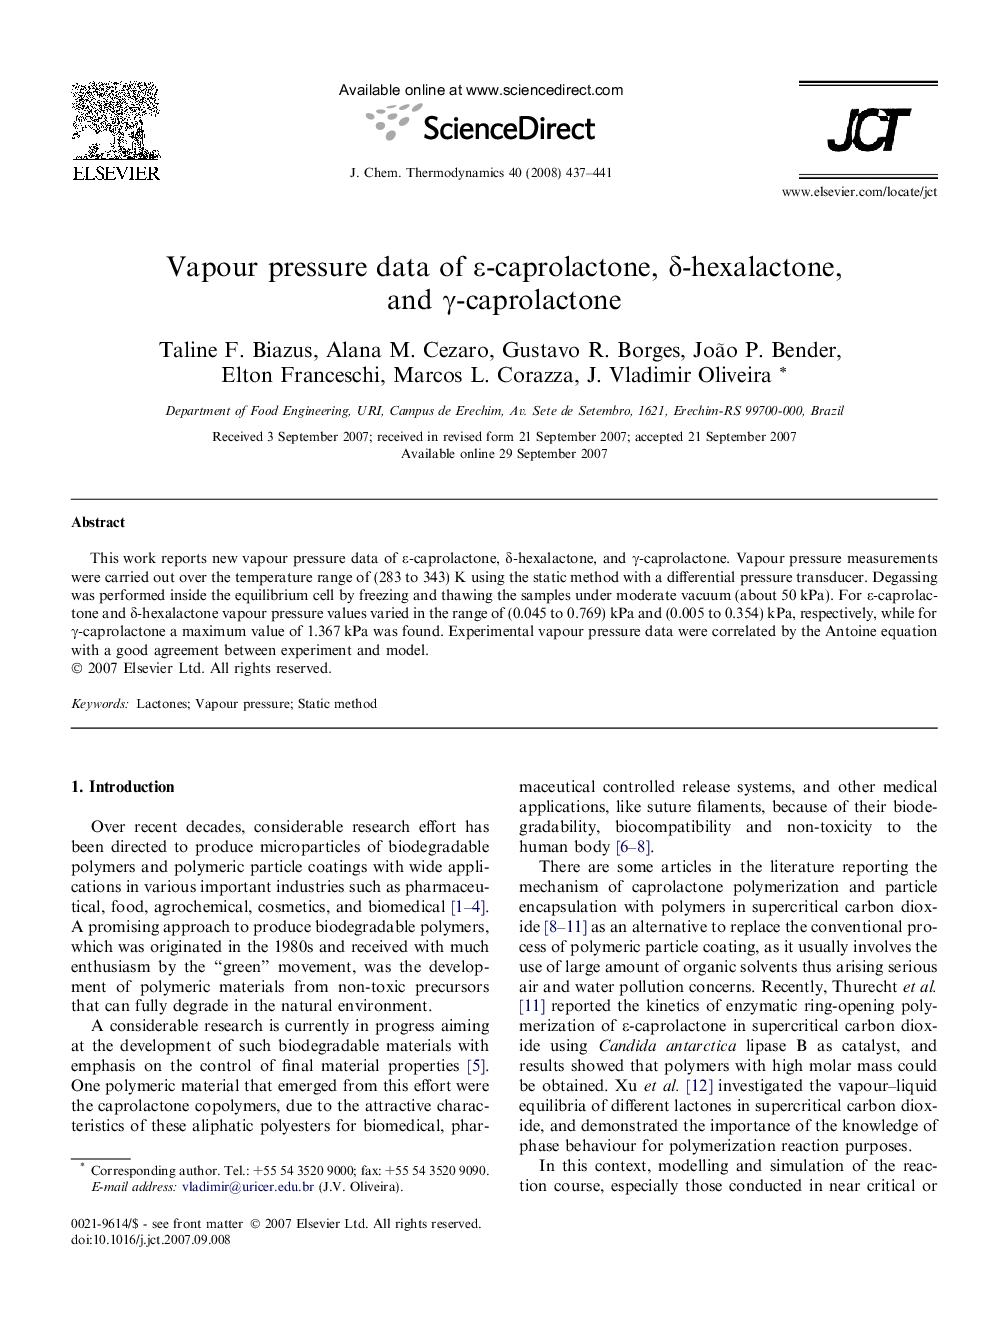 Vapour pressure data of ε-caprolactone, δ-hexalactone, and γ-caprolactone